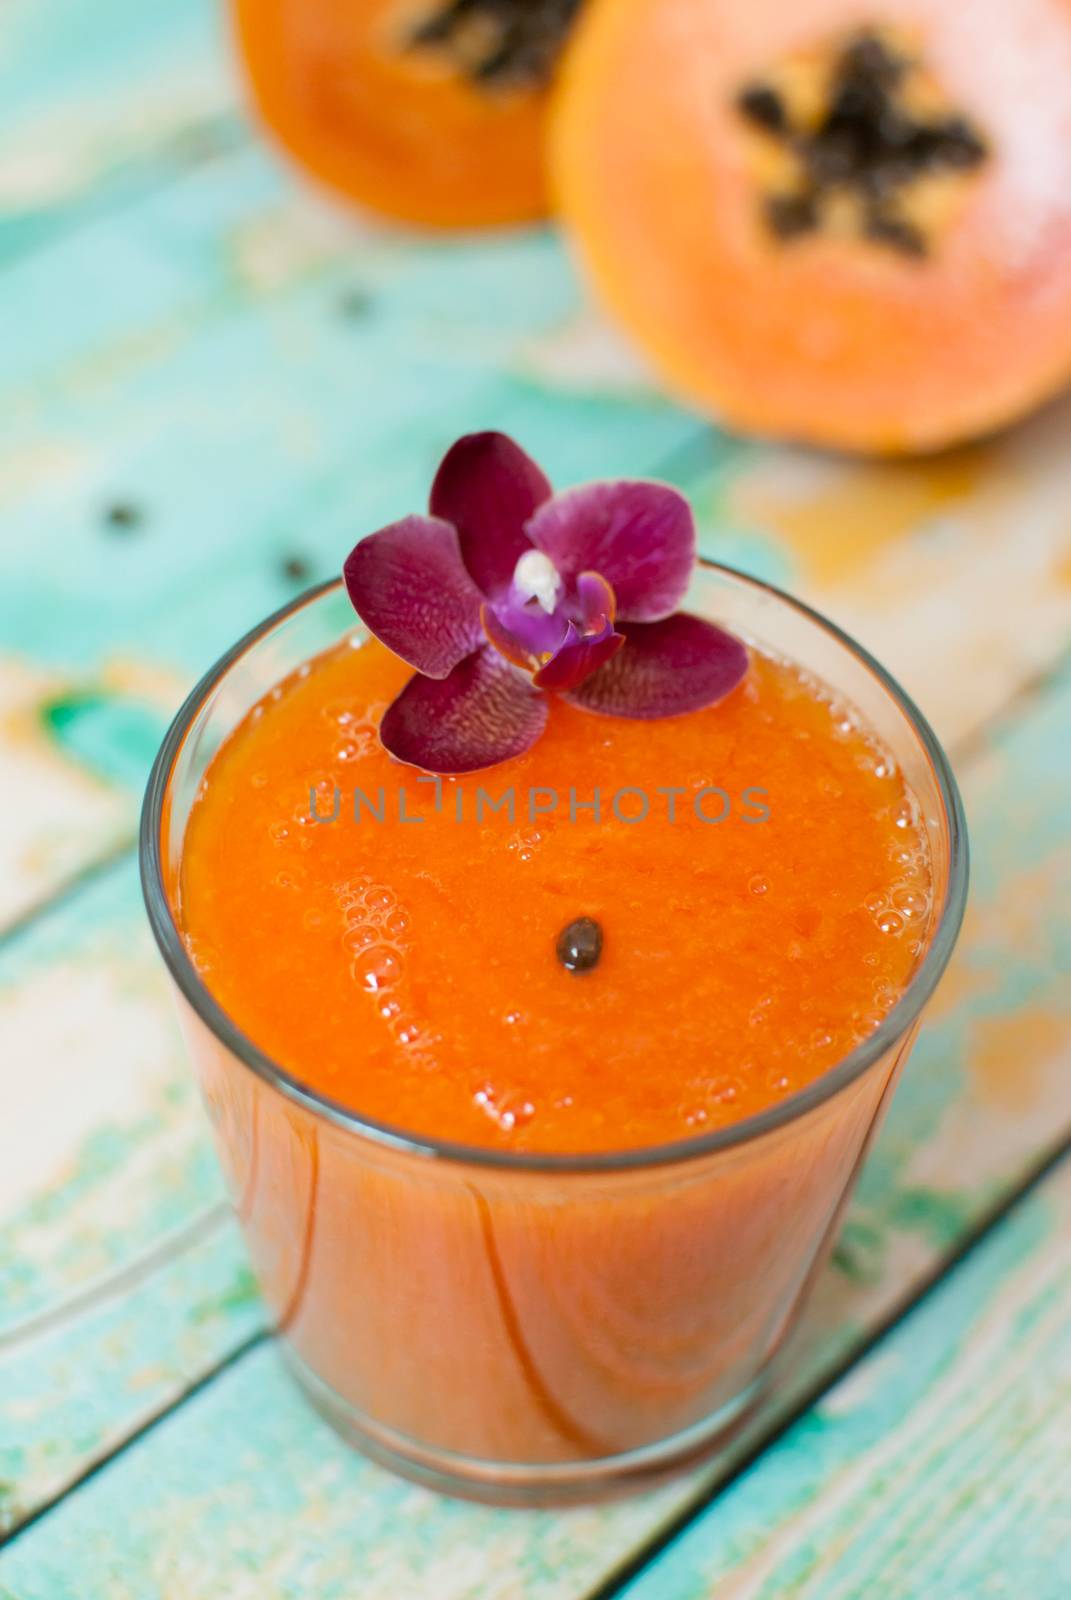 papaya smoothie by Dessie_bg